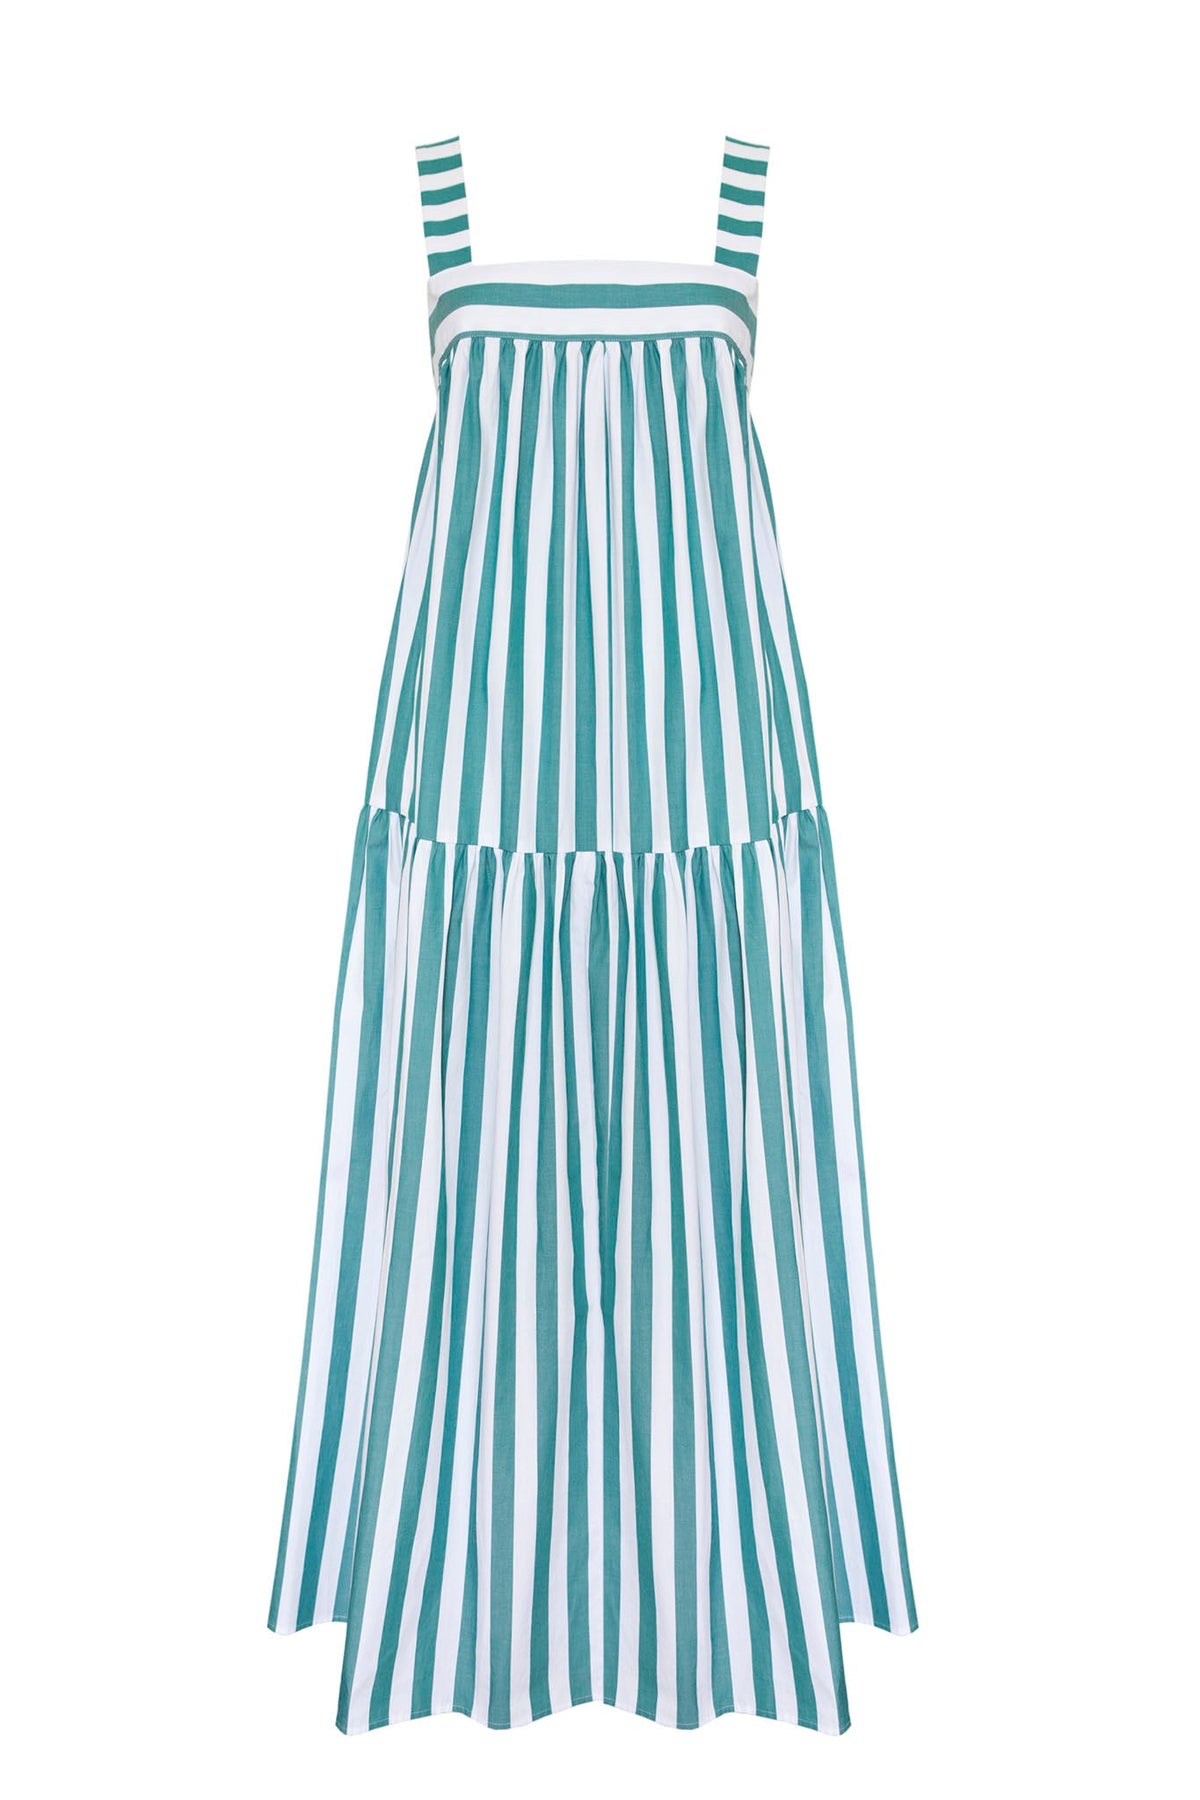 The Tula striped maxi has a square neckline, side seam pockets, a tie back closure and tiers.